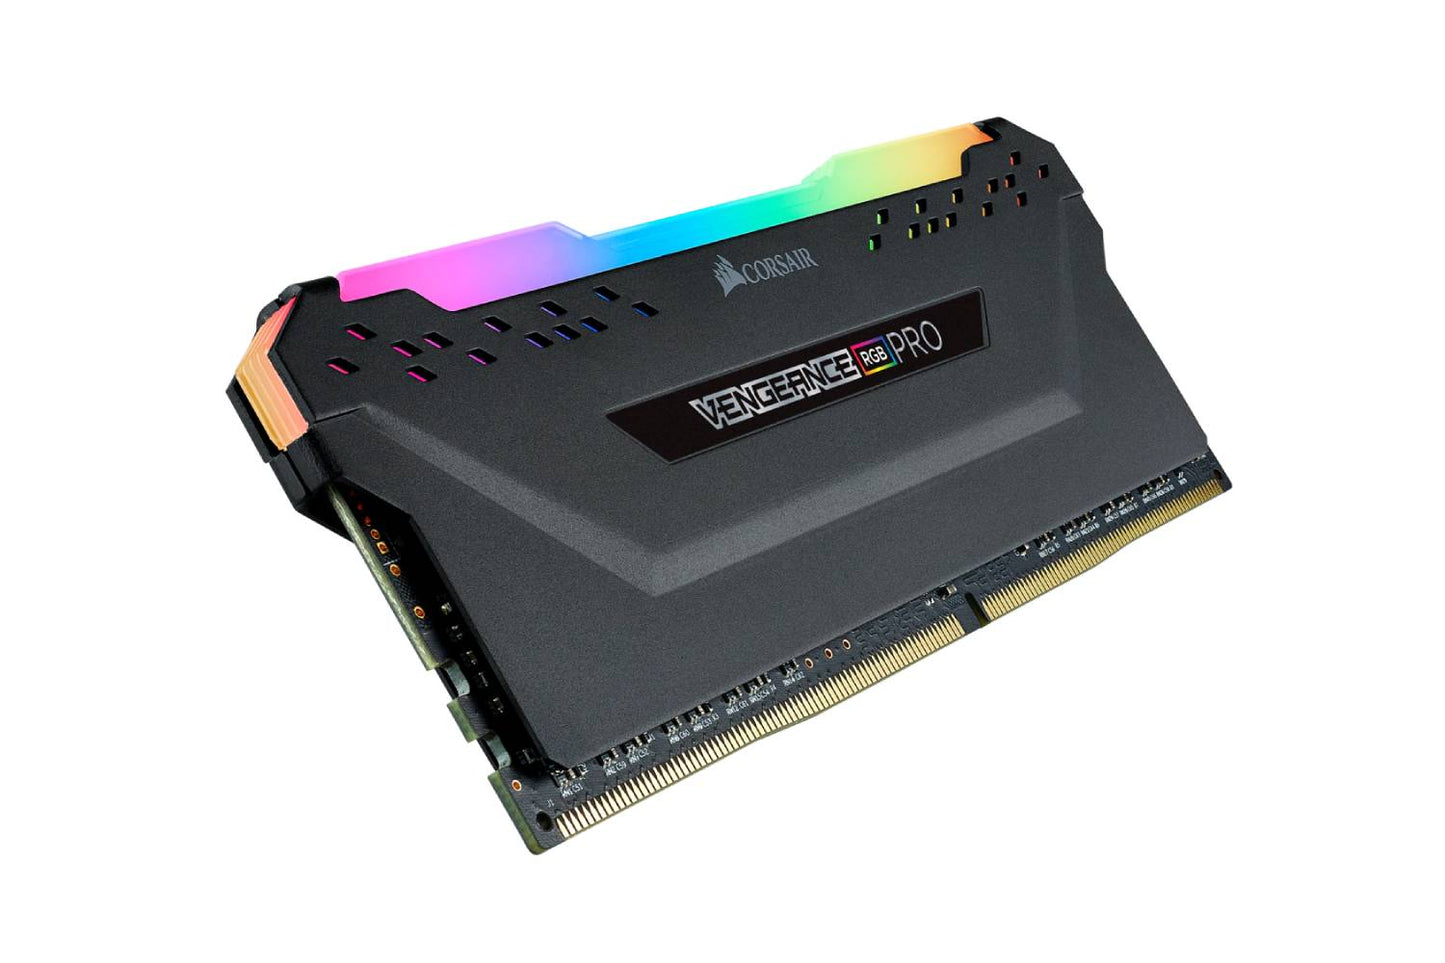 Corsair VENGEANCE RGB PRO 8GB (1 x 8GB) DDR4 DRAM 3200MHz C16 Memory Kit — Black